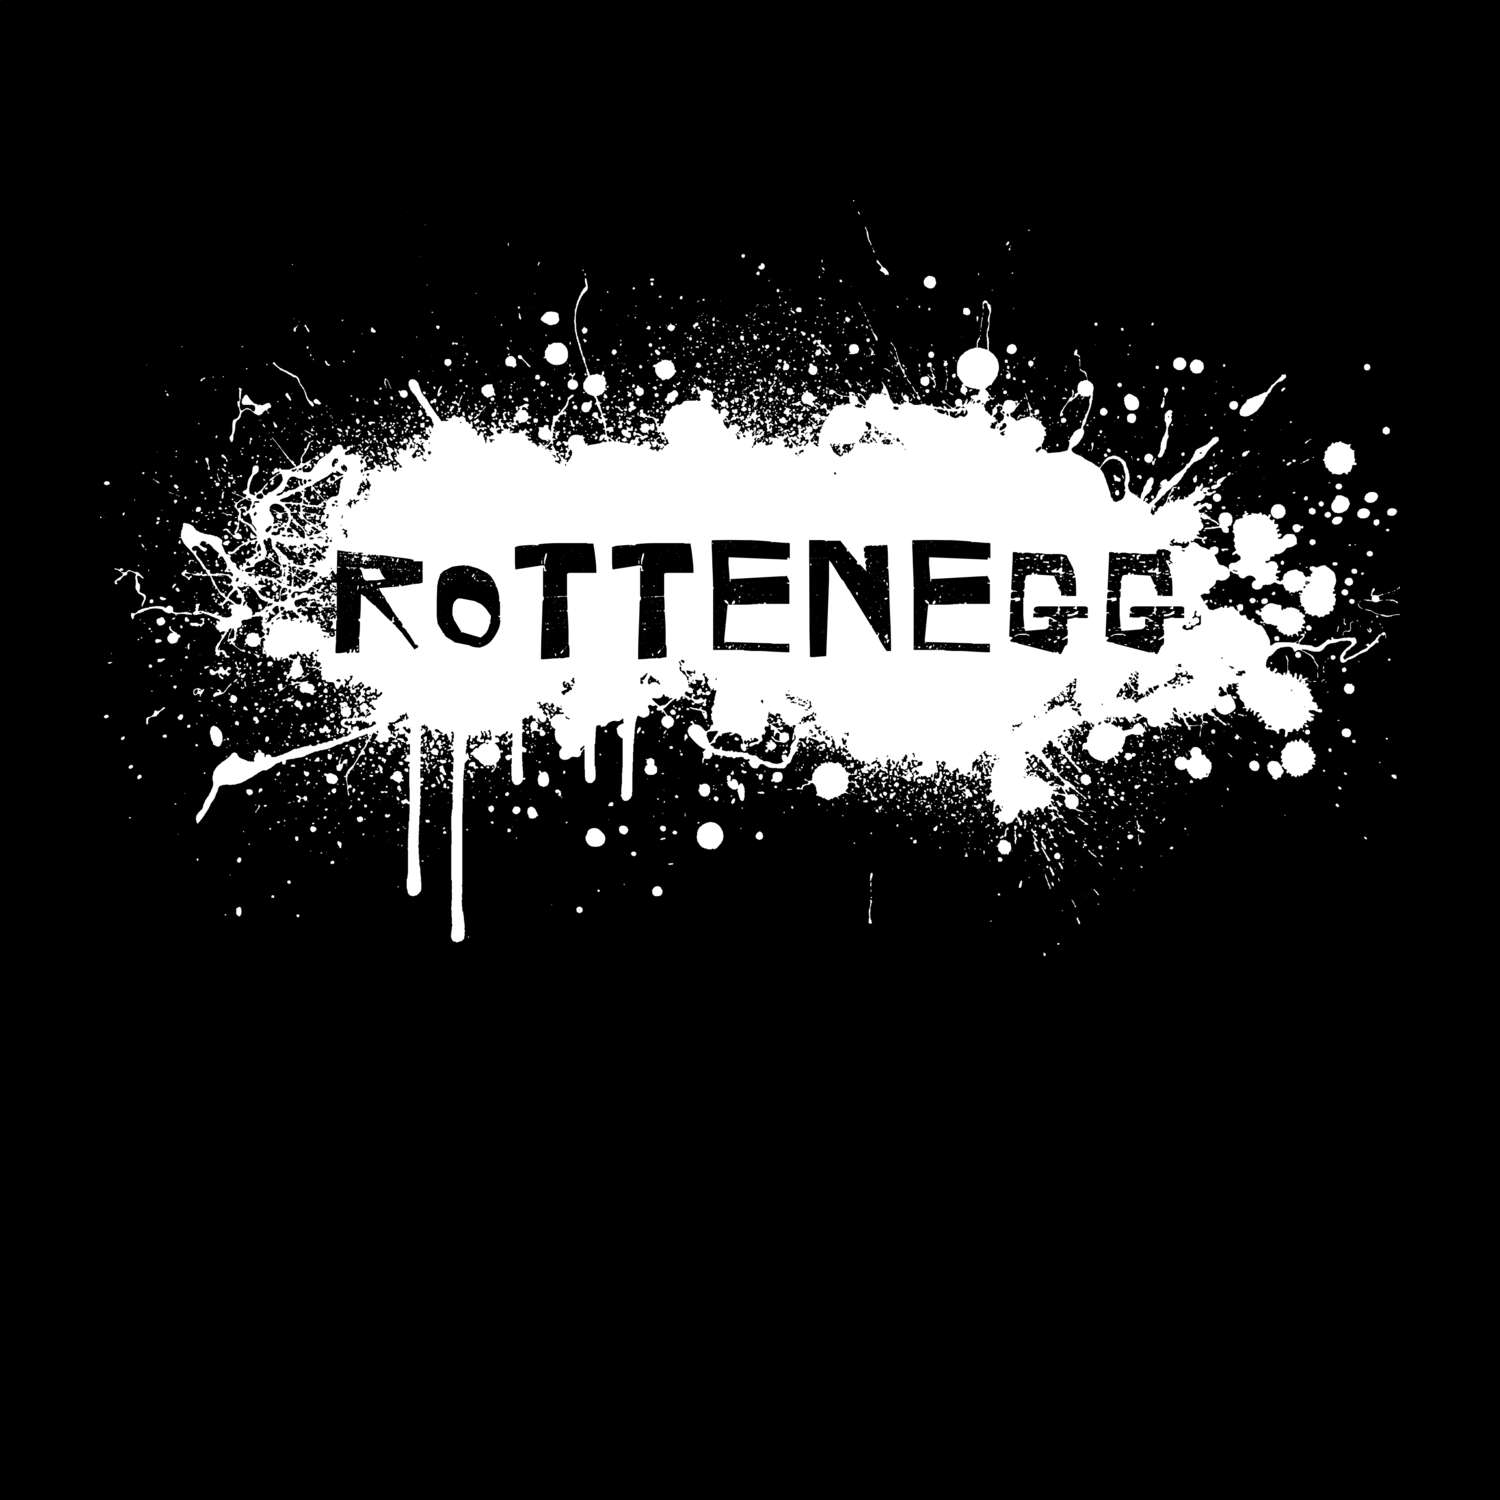 Rottenegg T-Shirt »Paint Splash Punk«